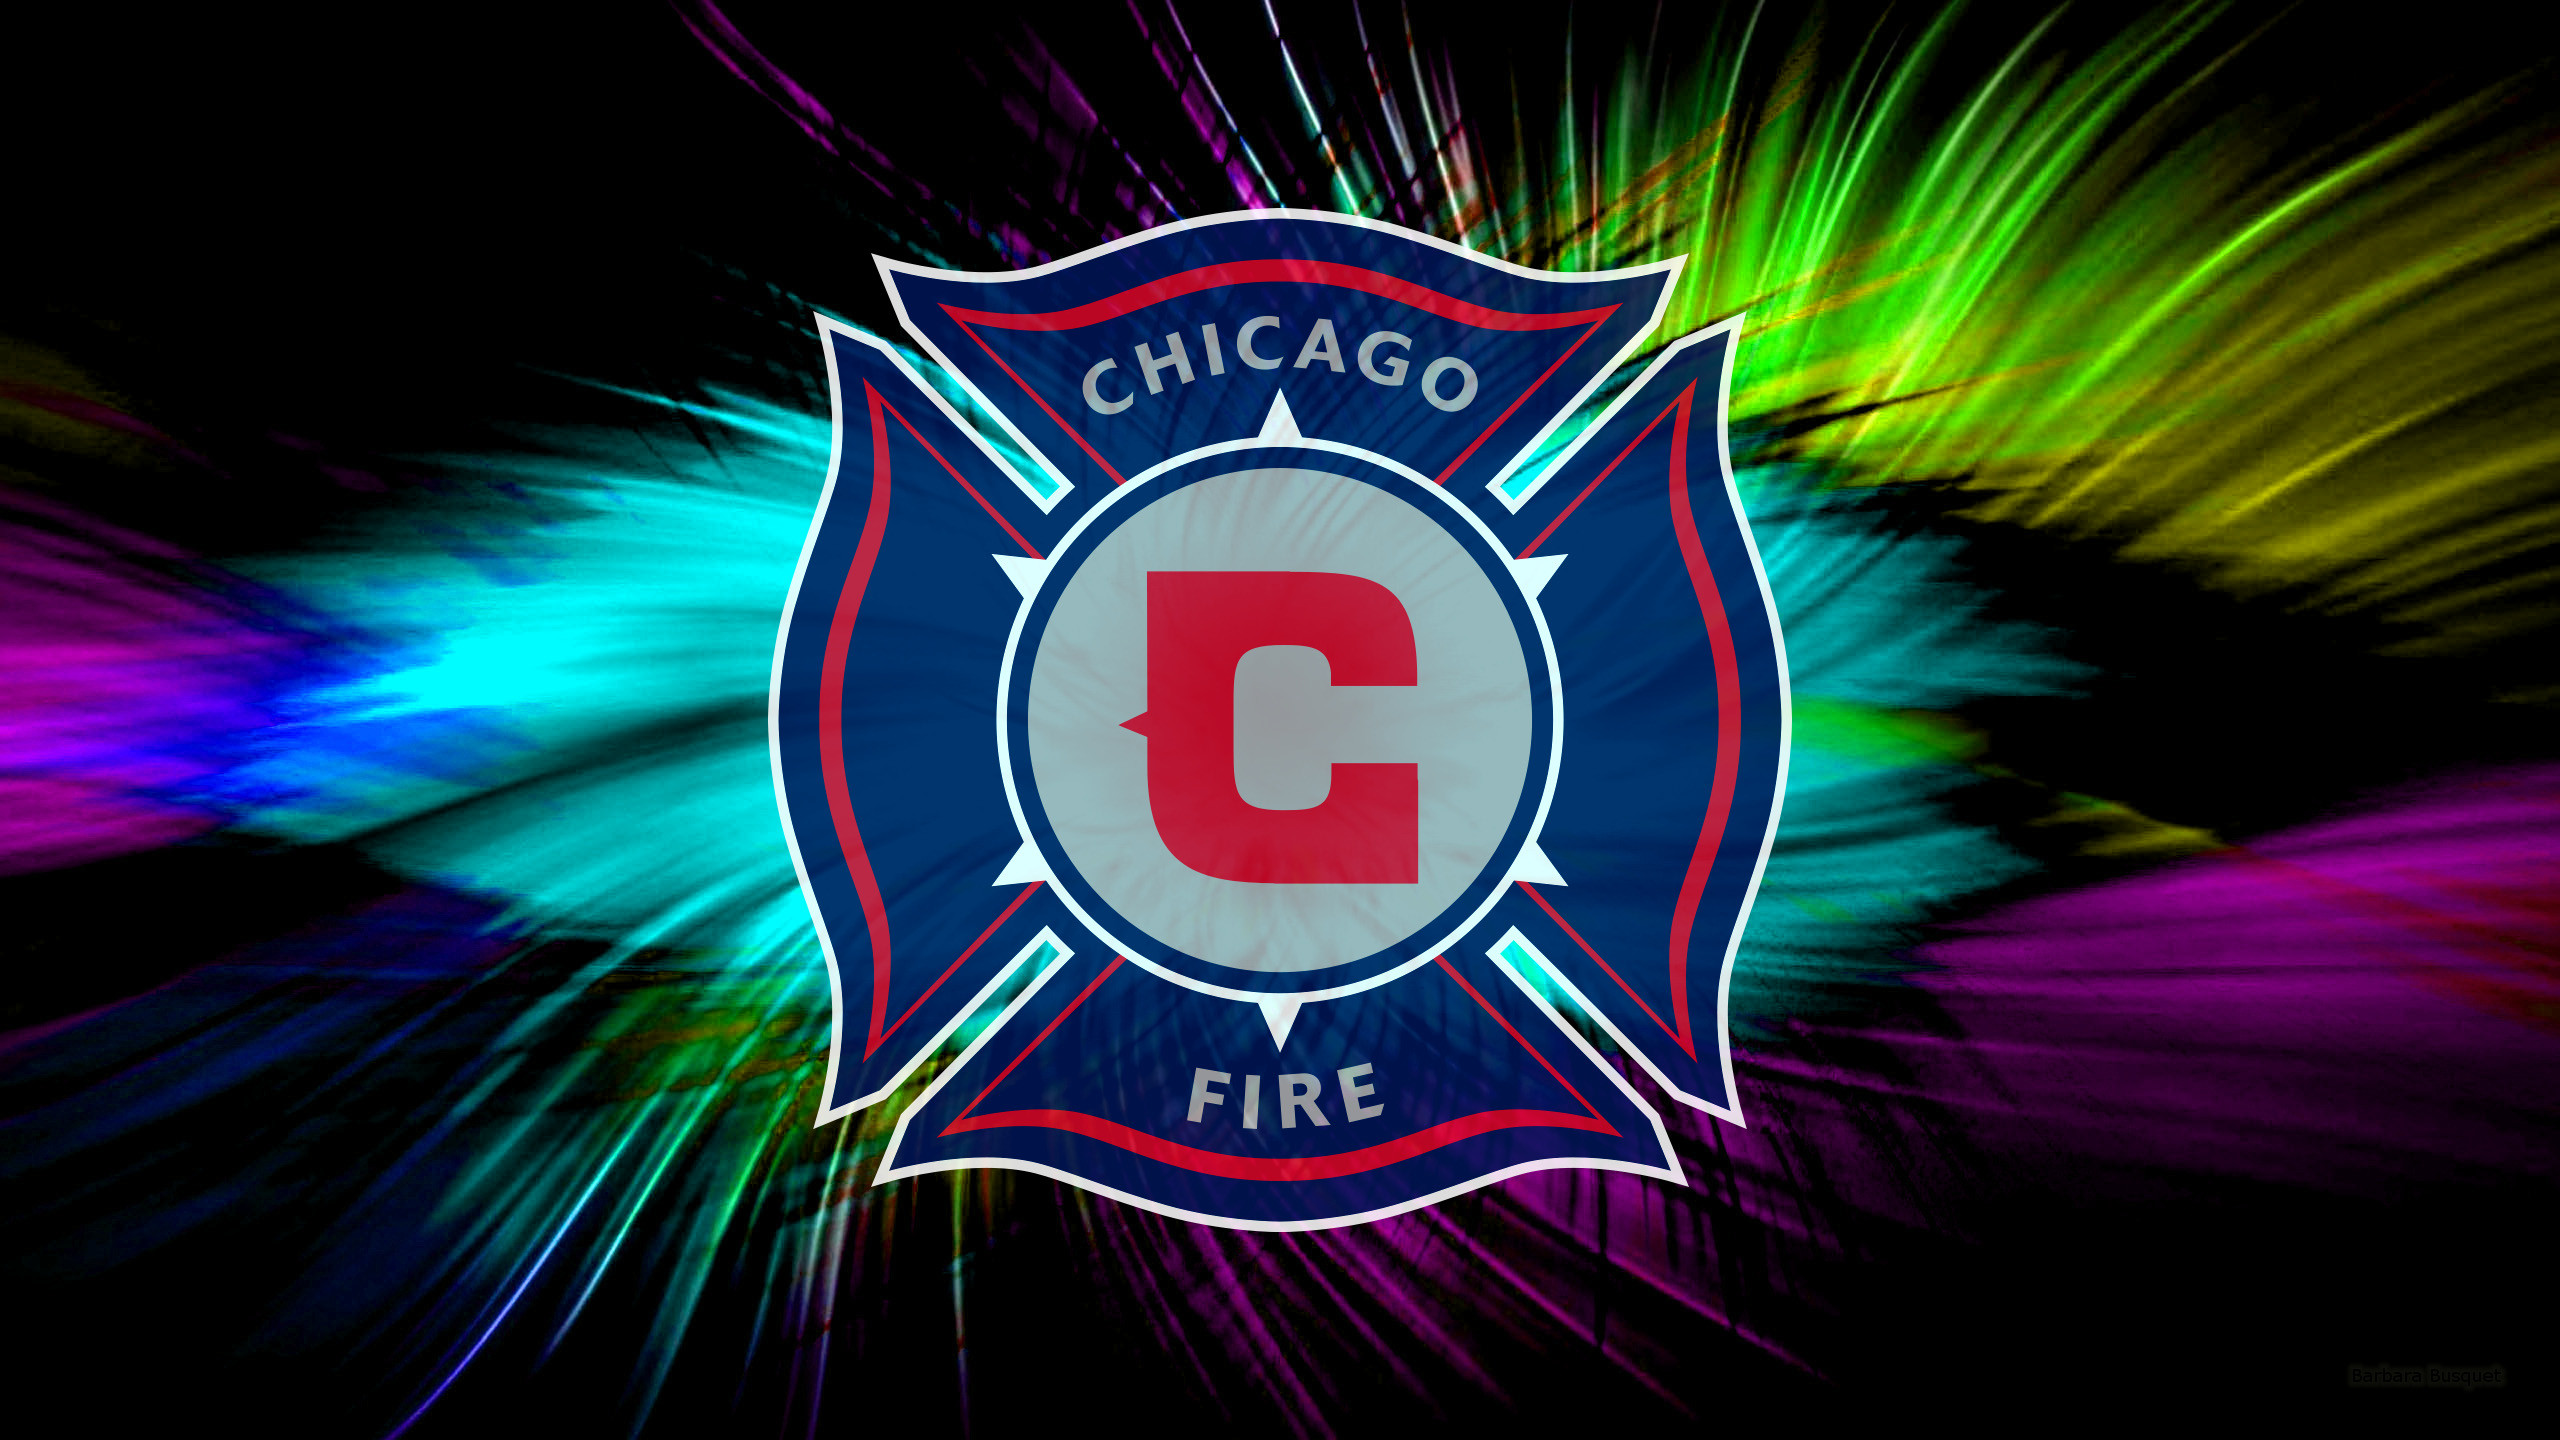 Chicago Fire FC HD Wallpaper